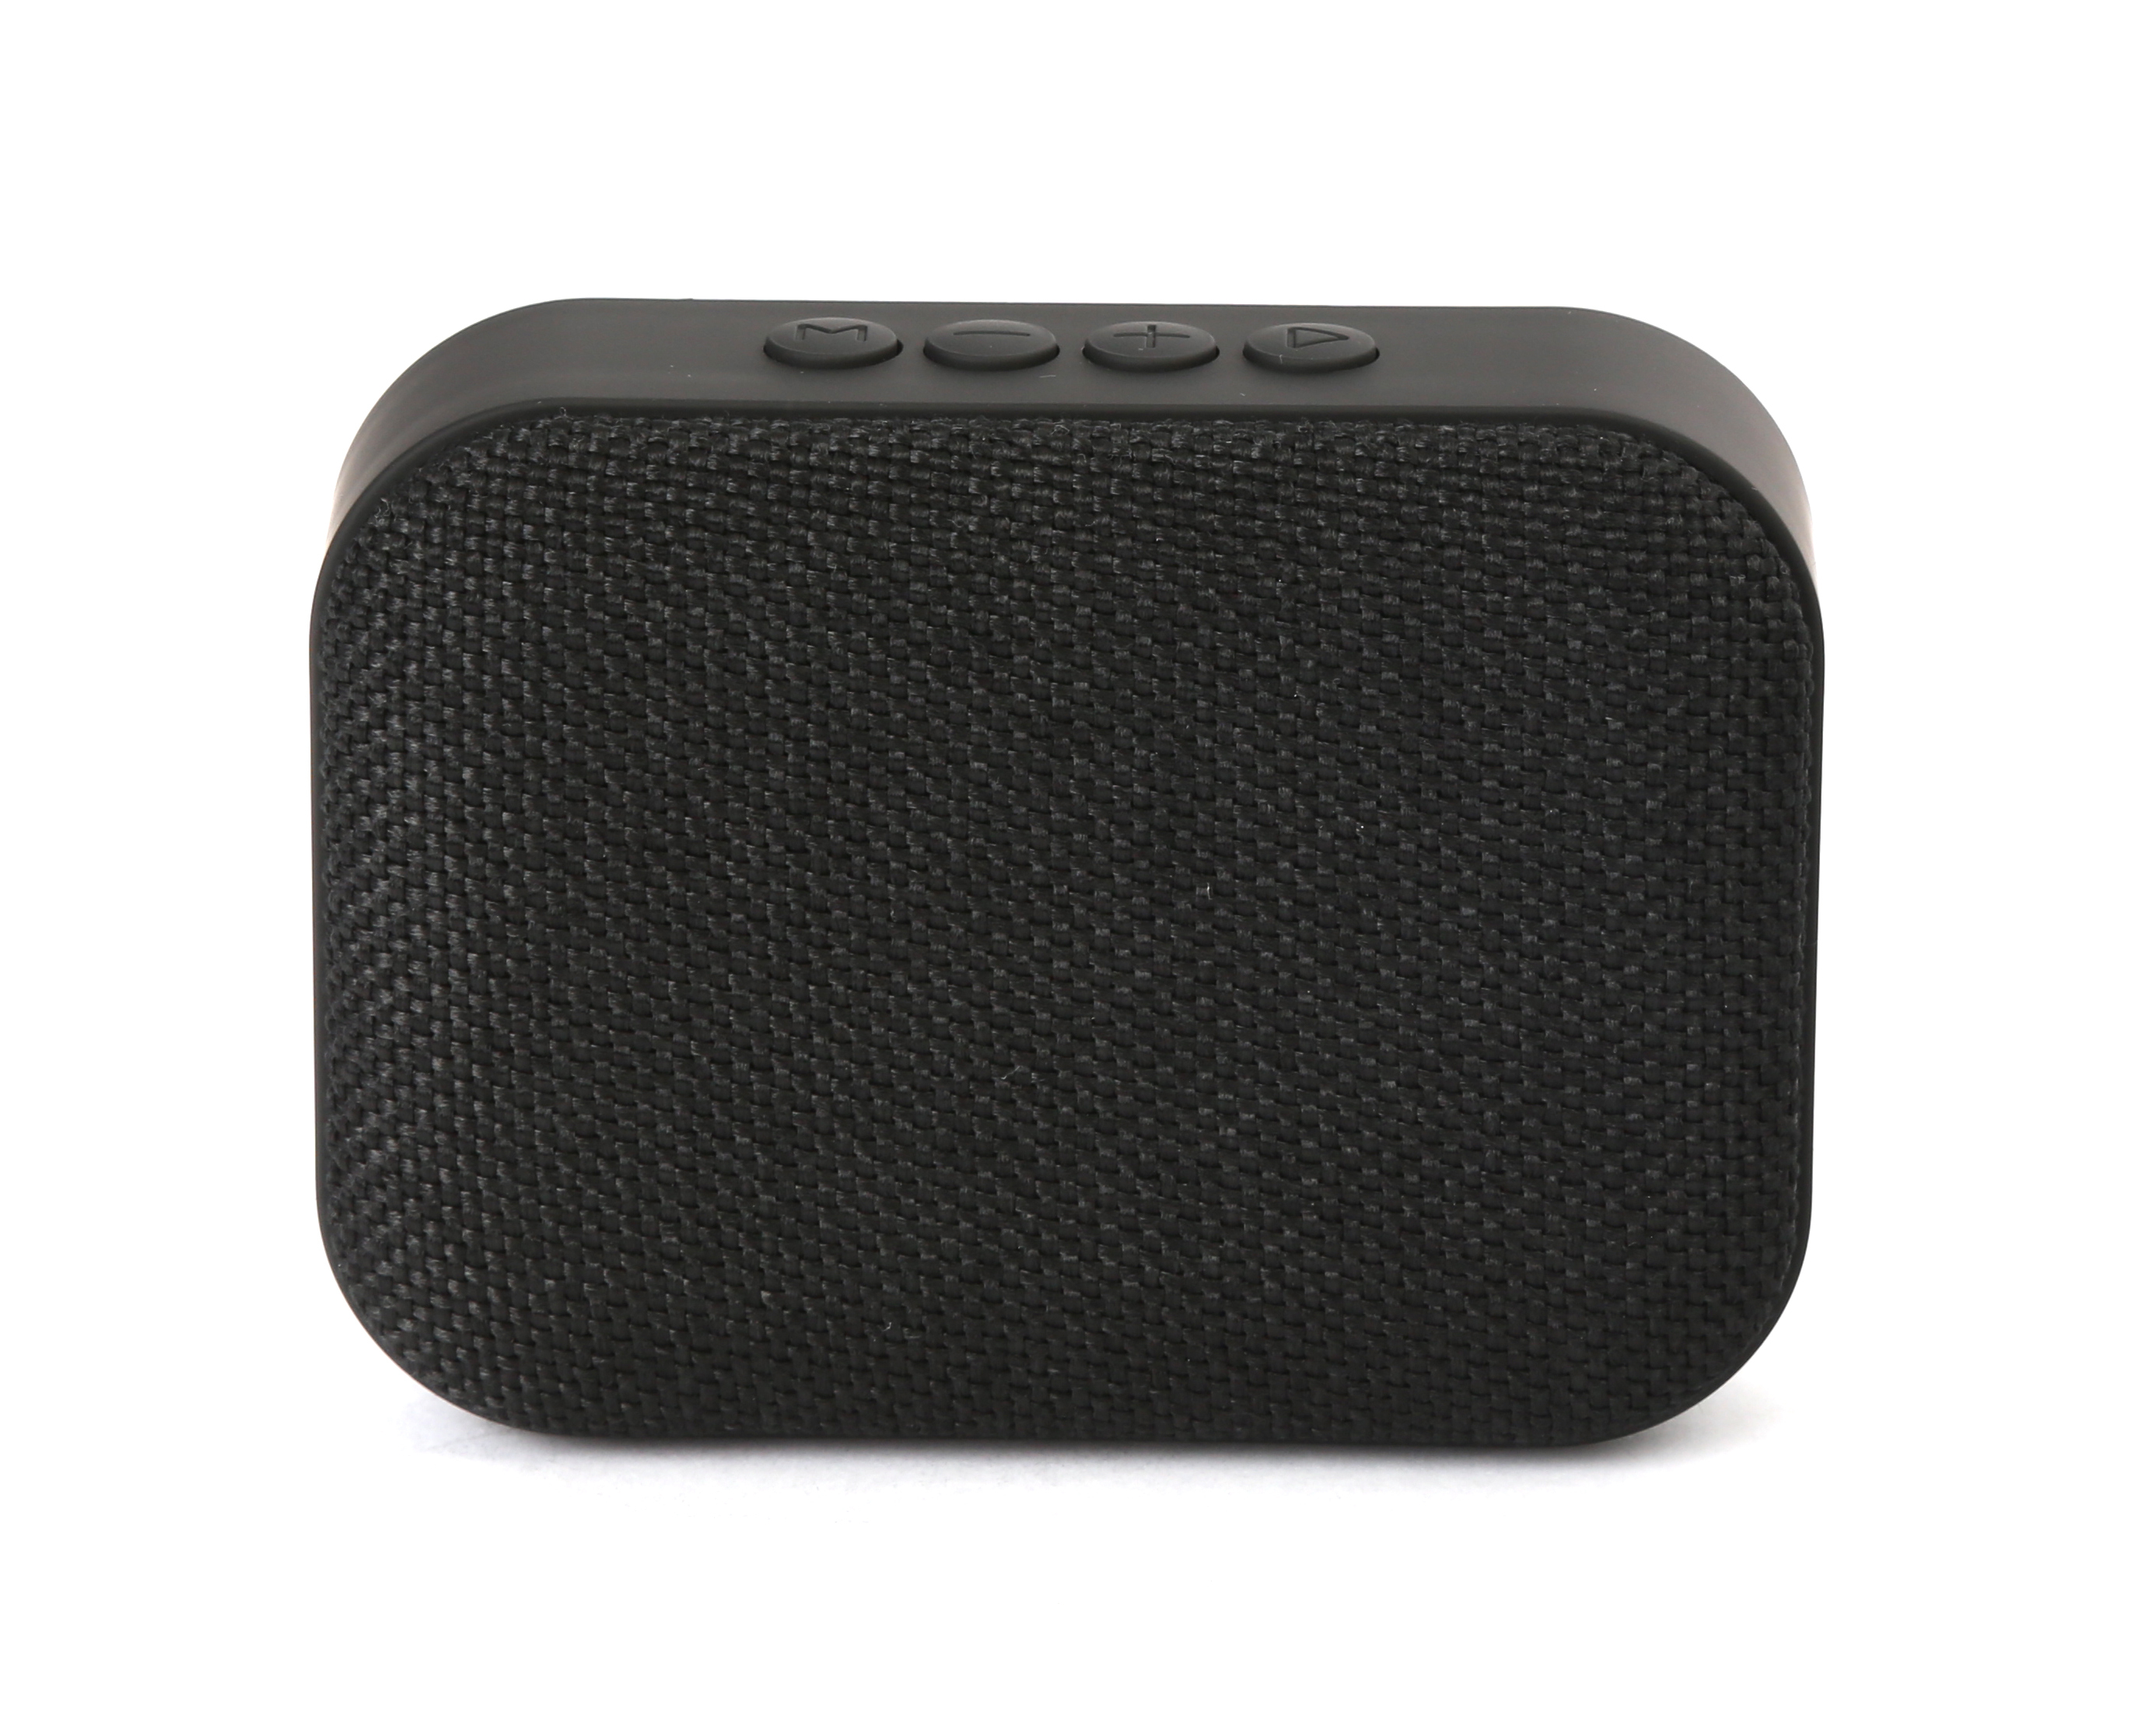 OMEGA Bluetooth 4.1 Wireless Speaker with FM Radio / Handsfree / MicroSD / USB / 3W / Black fabric